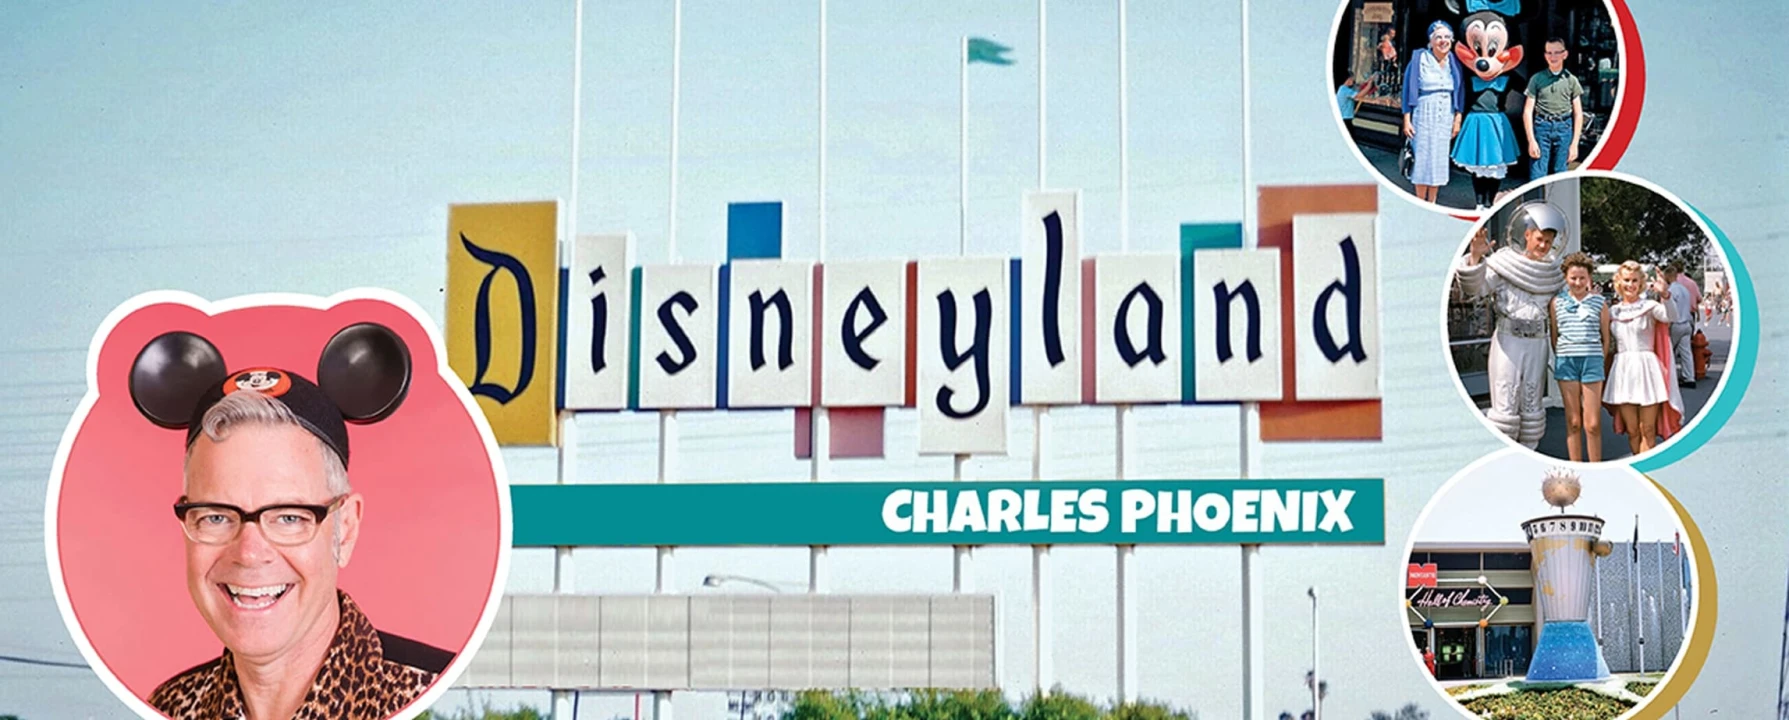 Charles Phoenix’s Big Retro Disneyland Slide Show: What to expect - 1